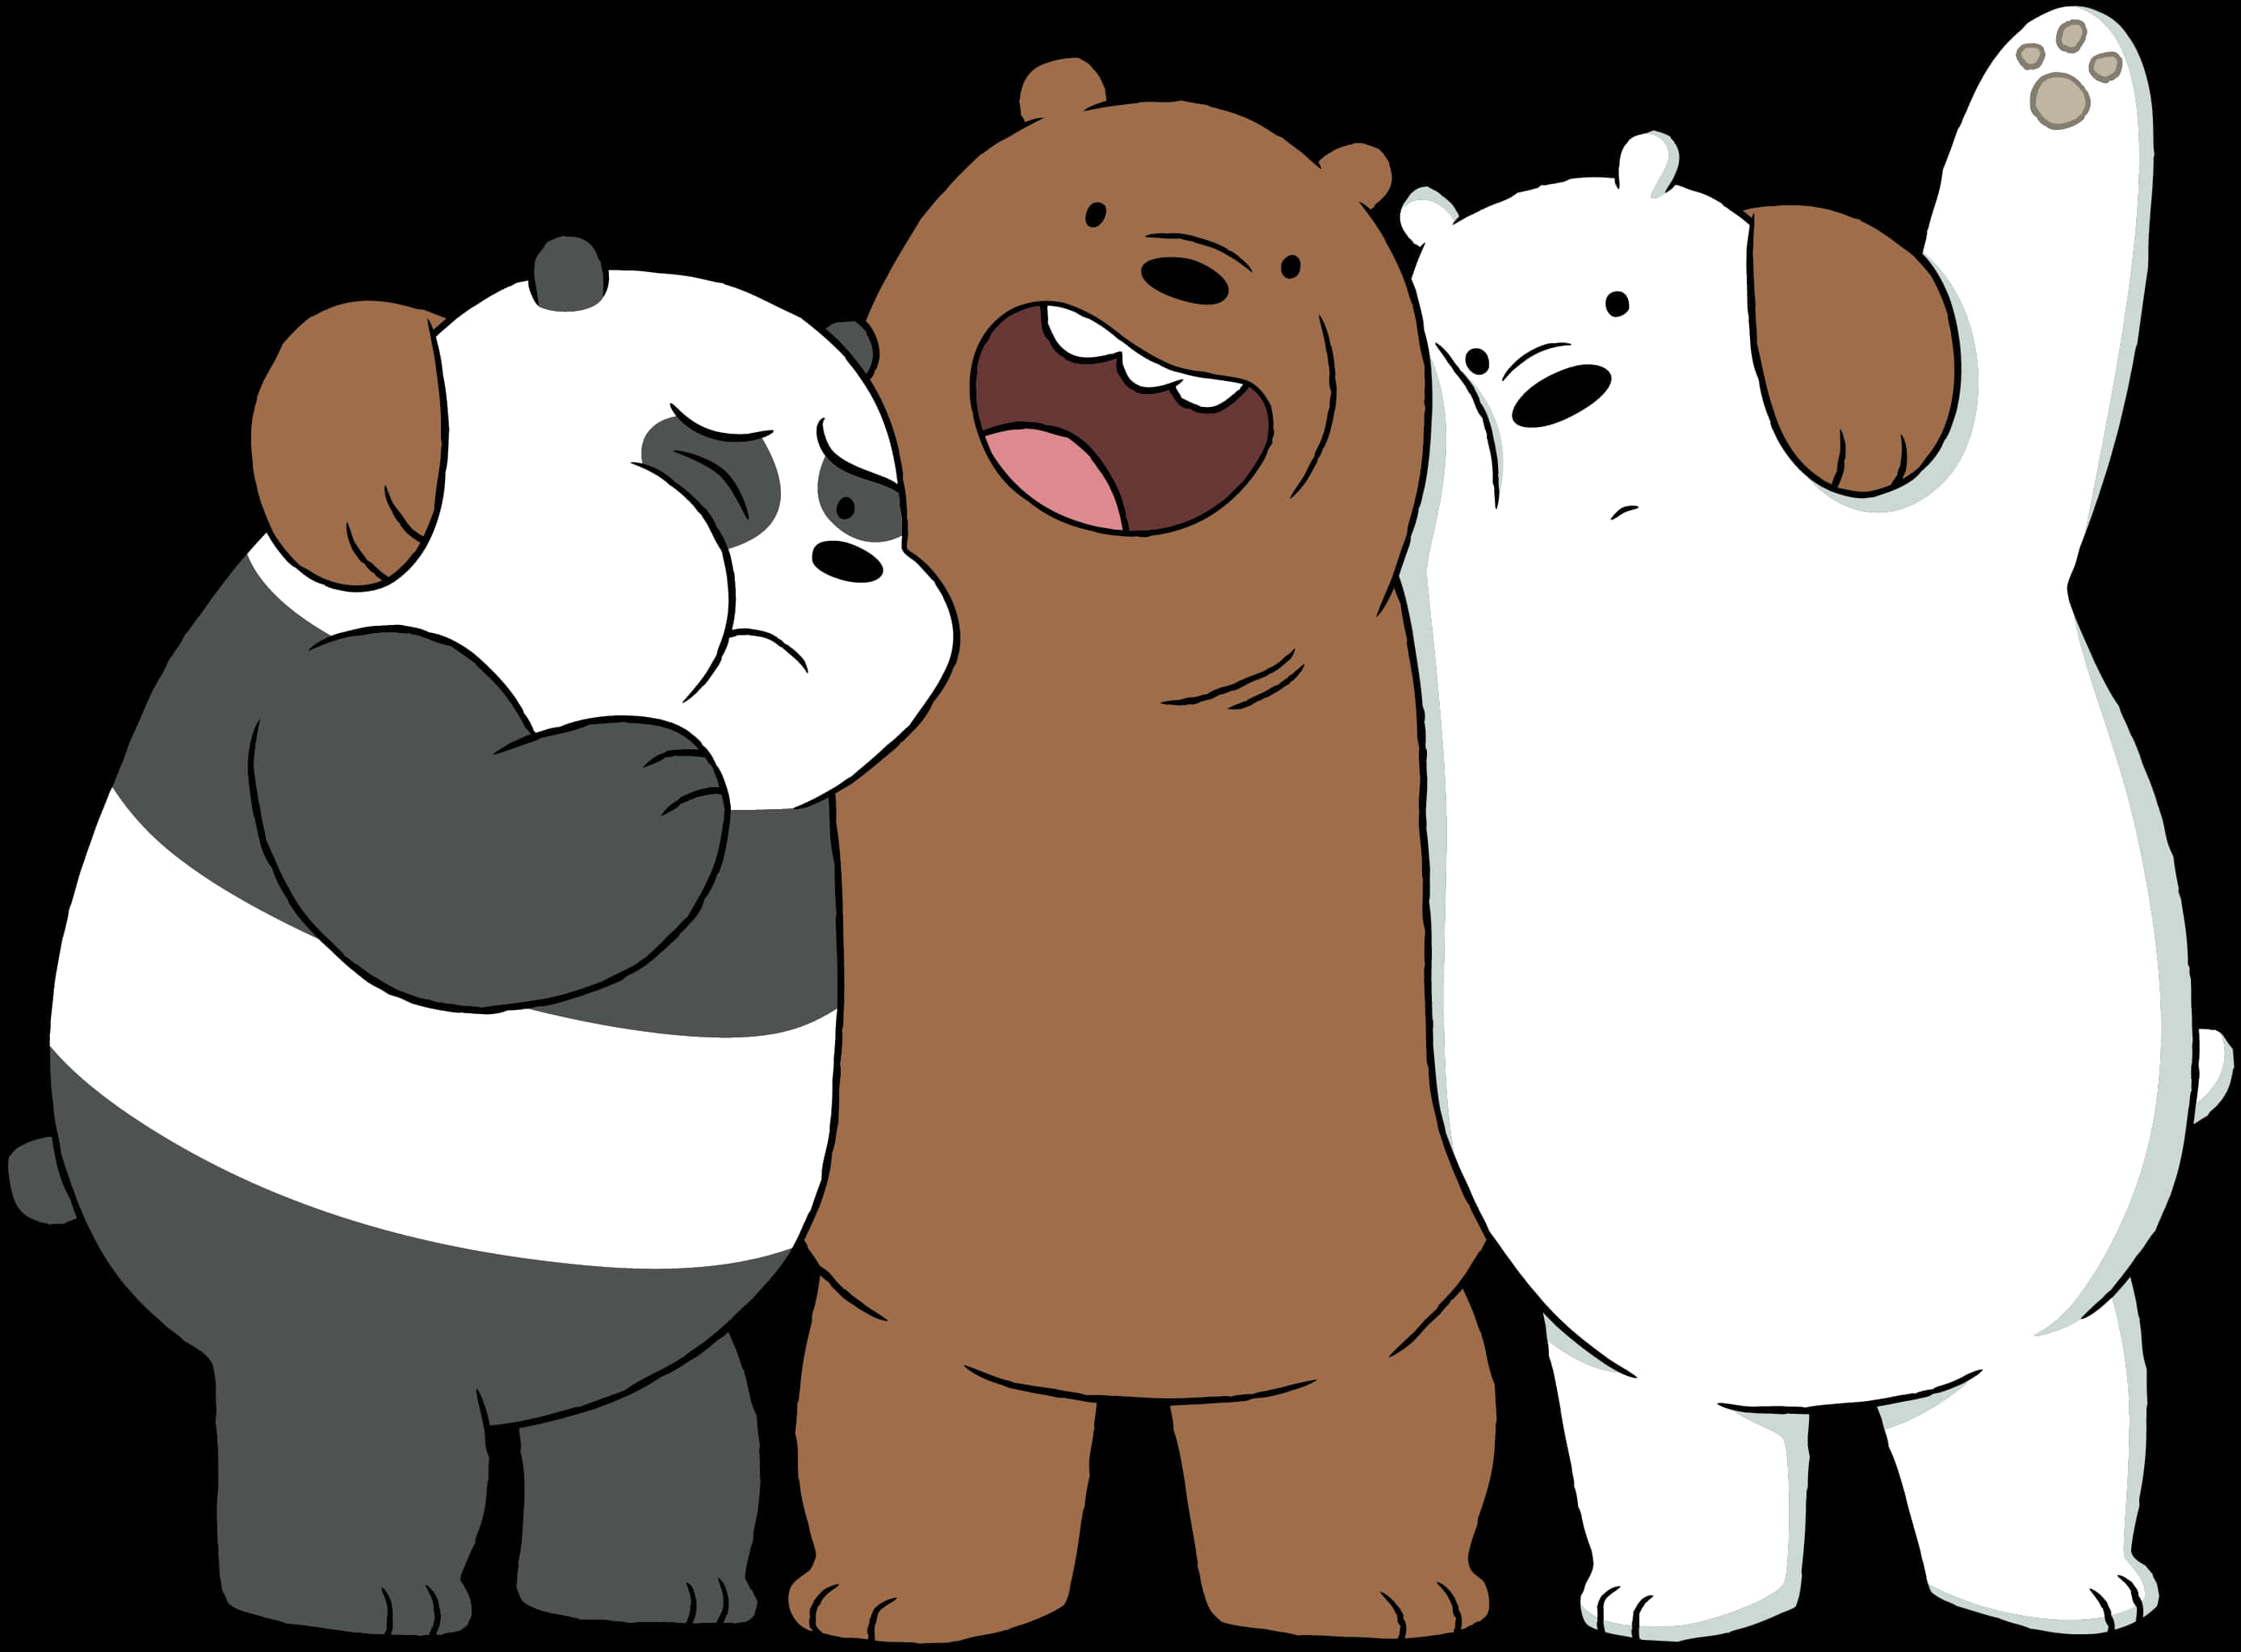 Cartoon Bears Hugging Each Other